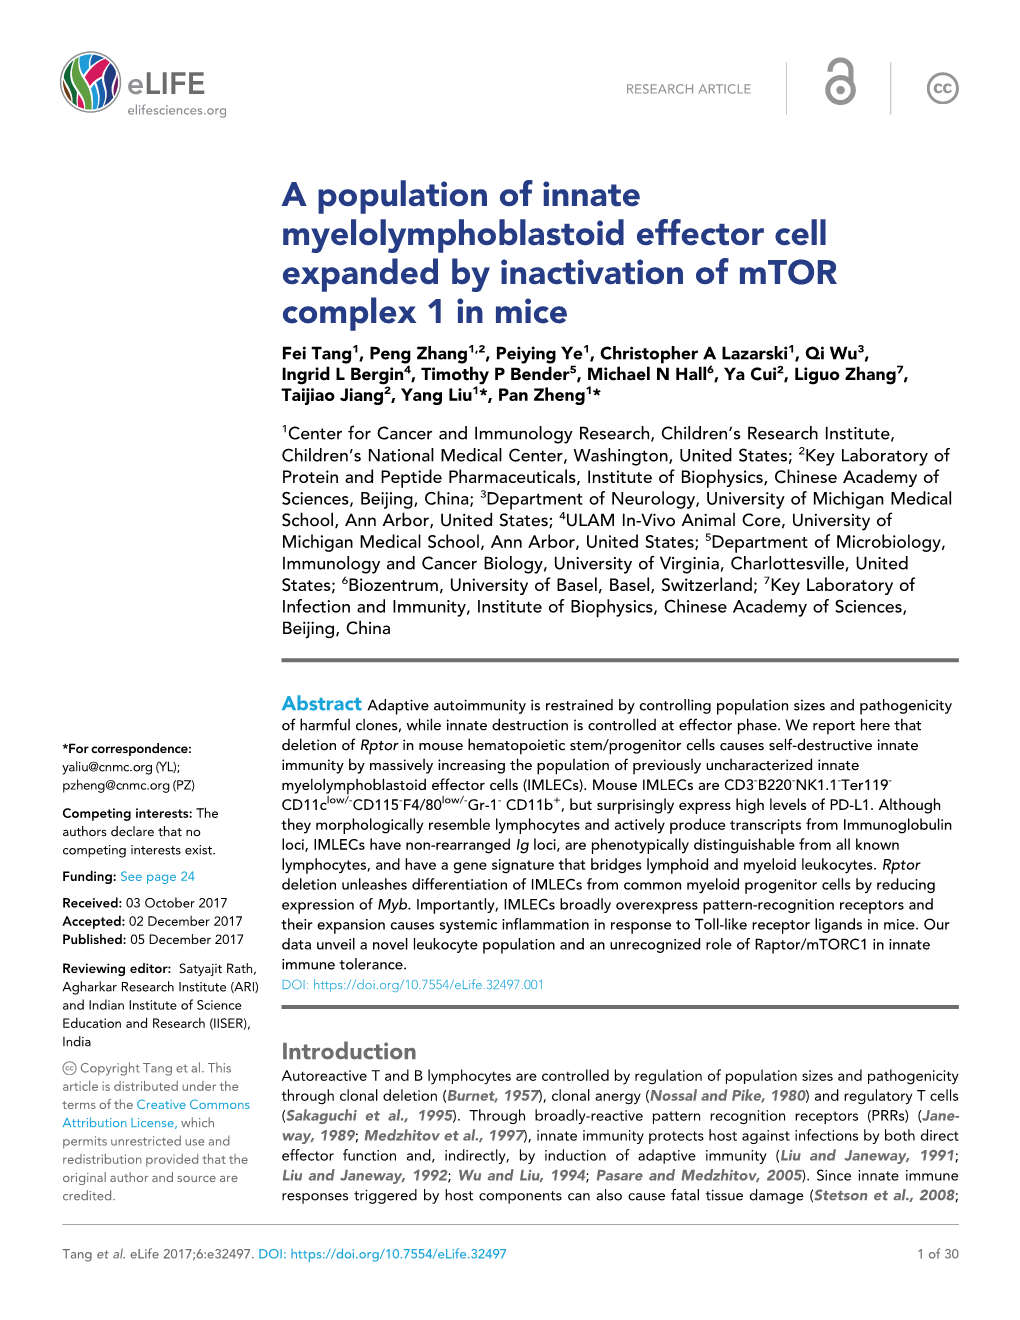 A Population of Innate Myelolymphoblastoid Effector Cell